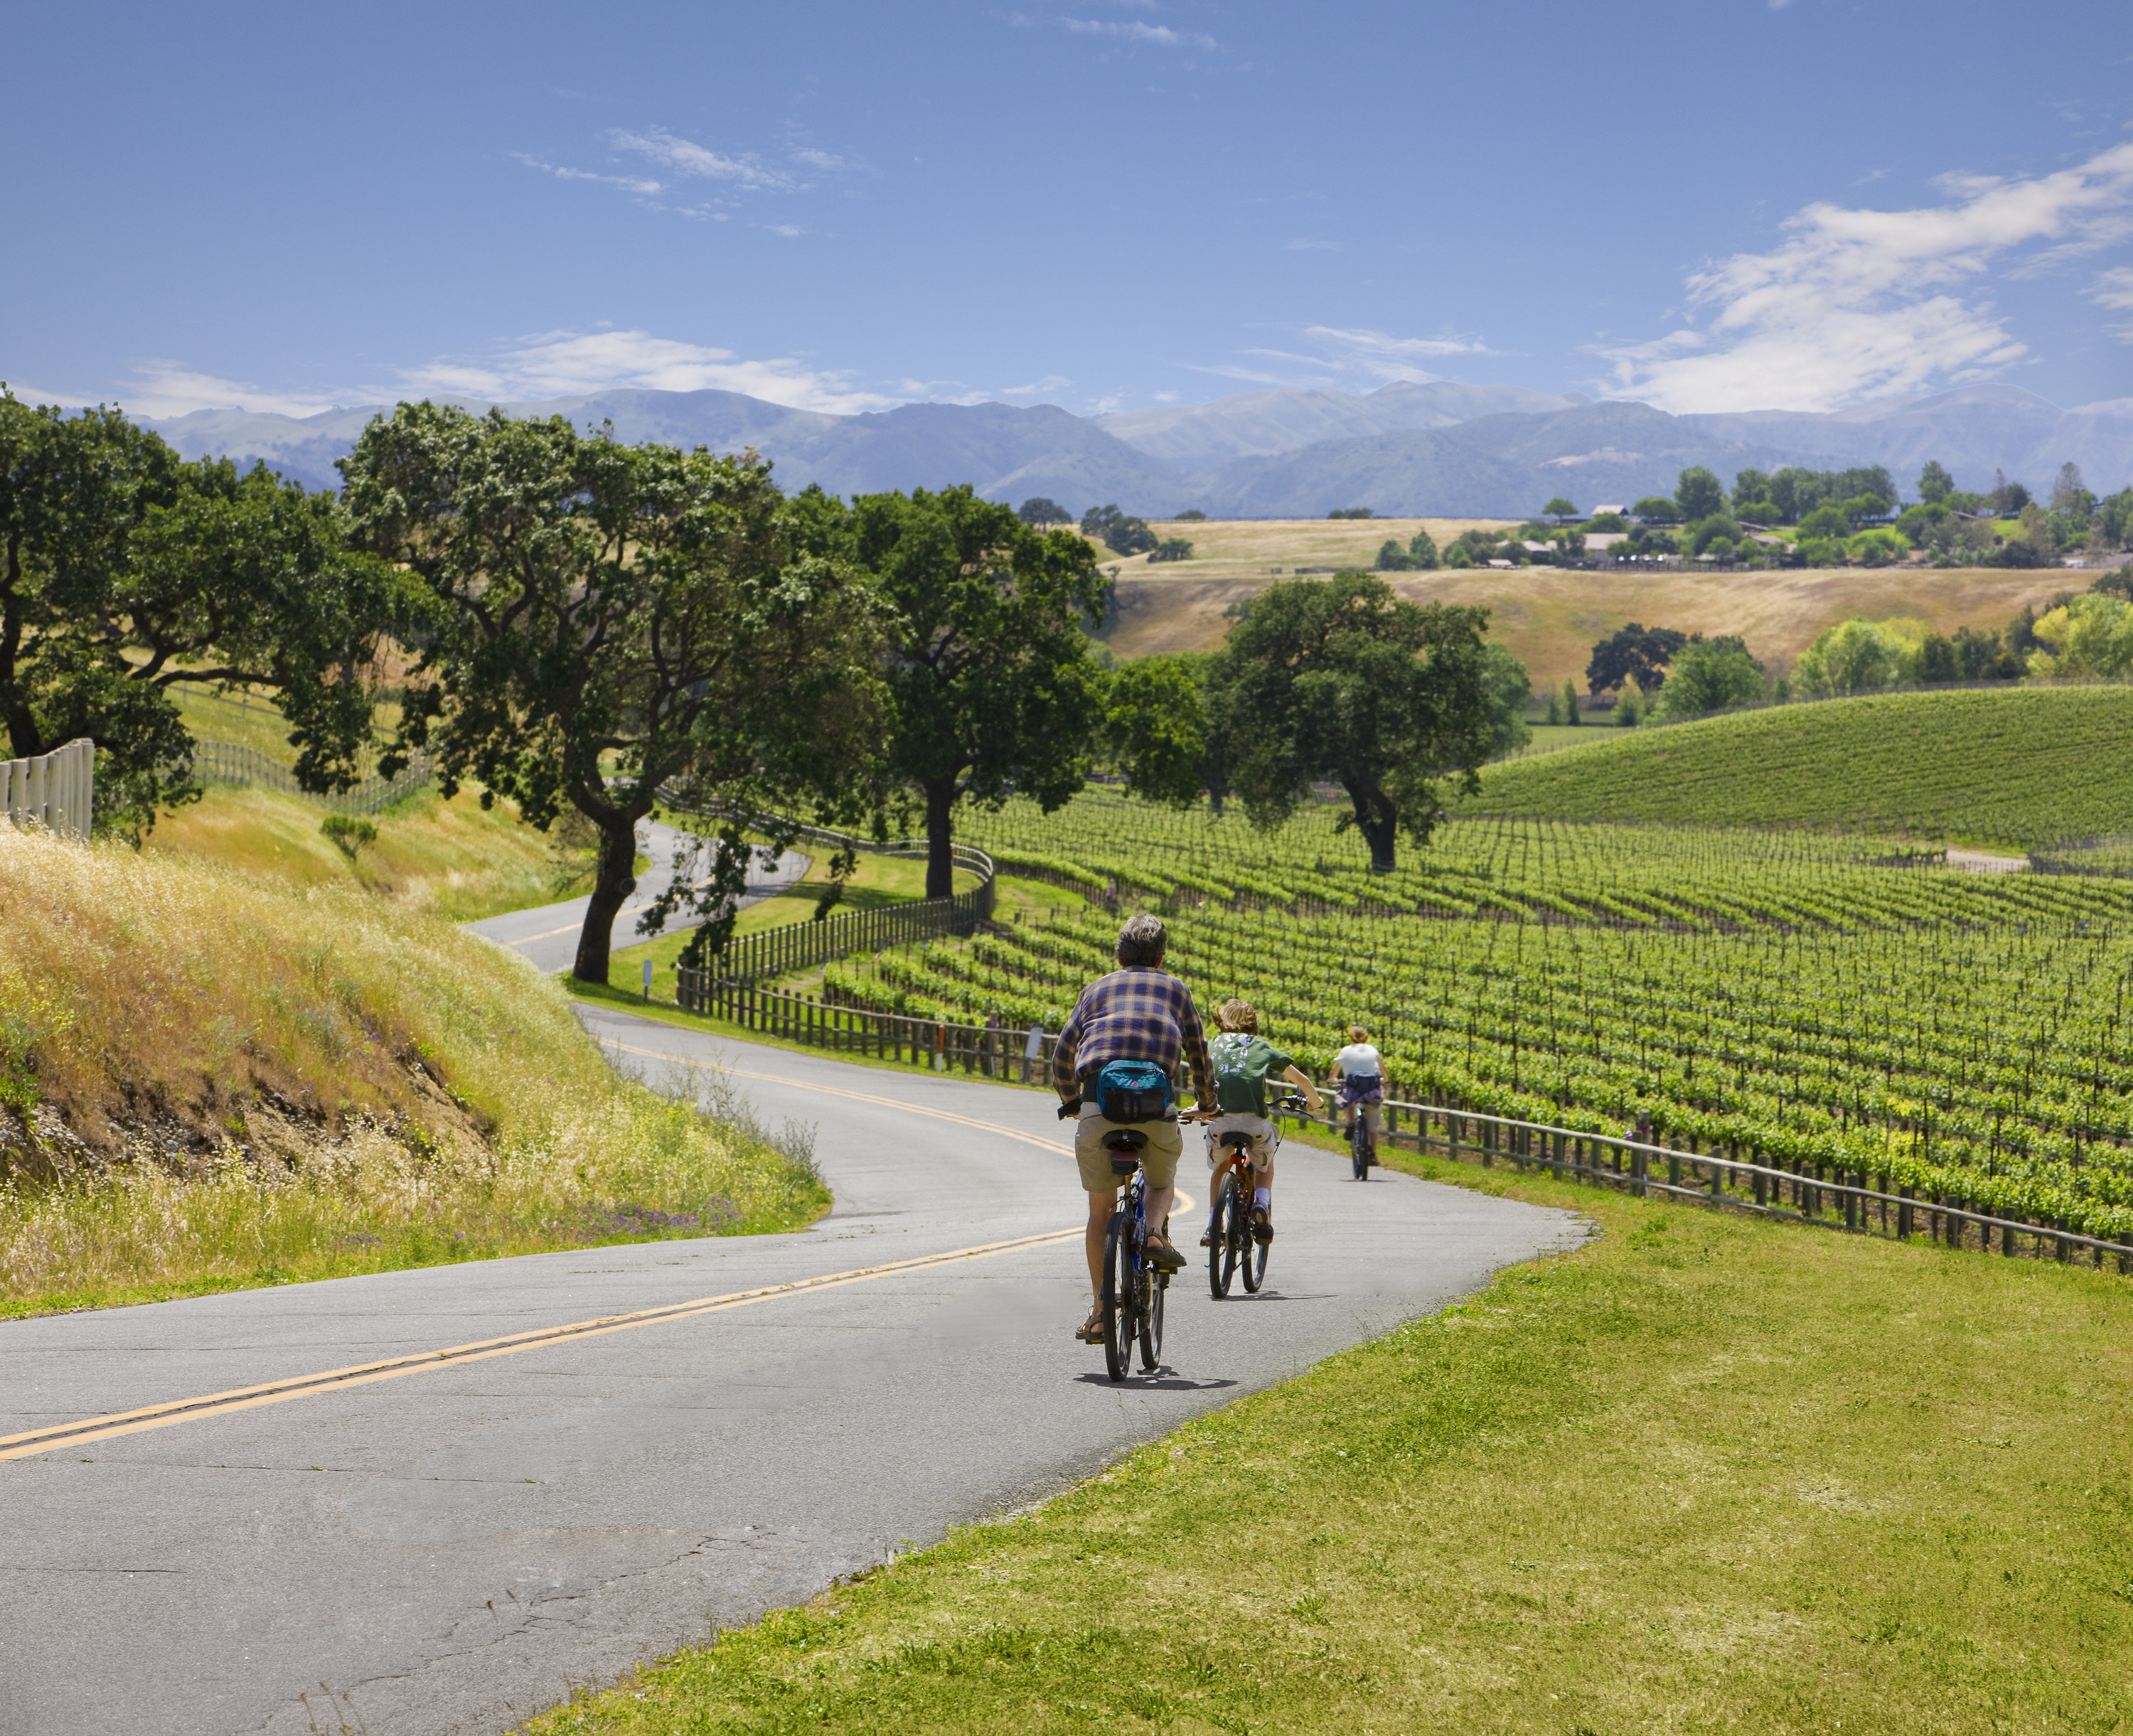 A Santa Barbara biking trail that runs alongside a winery